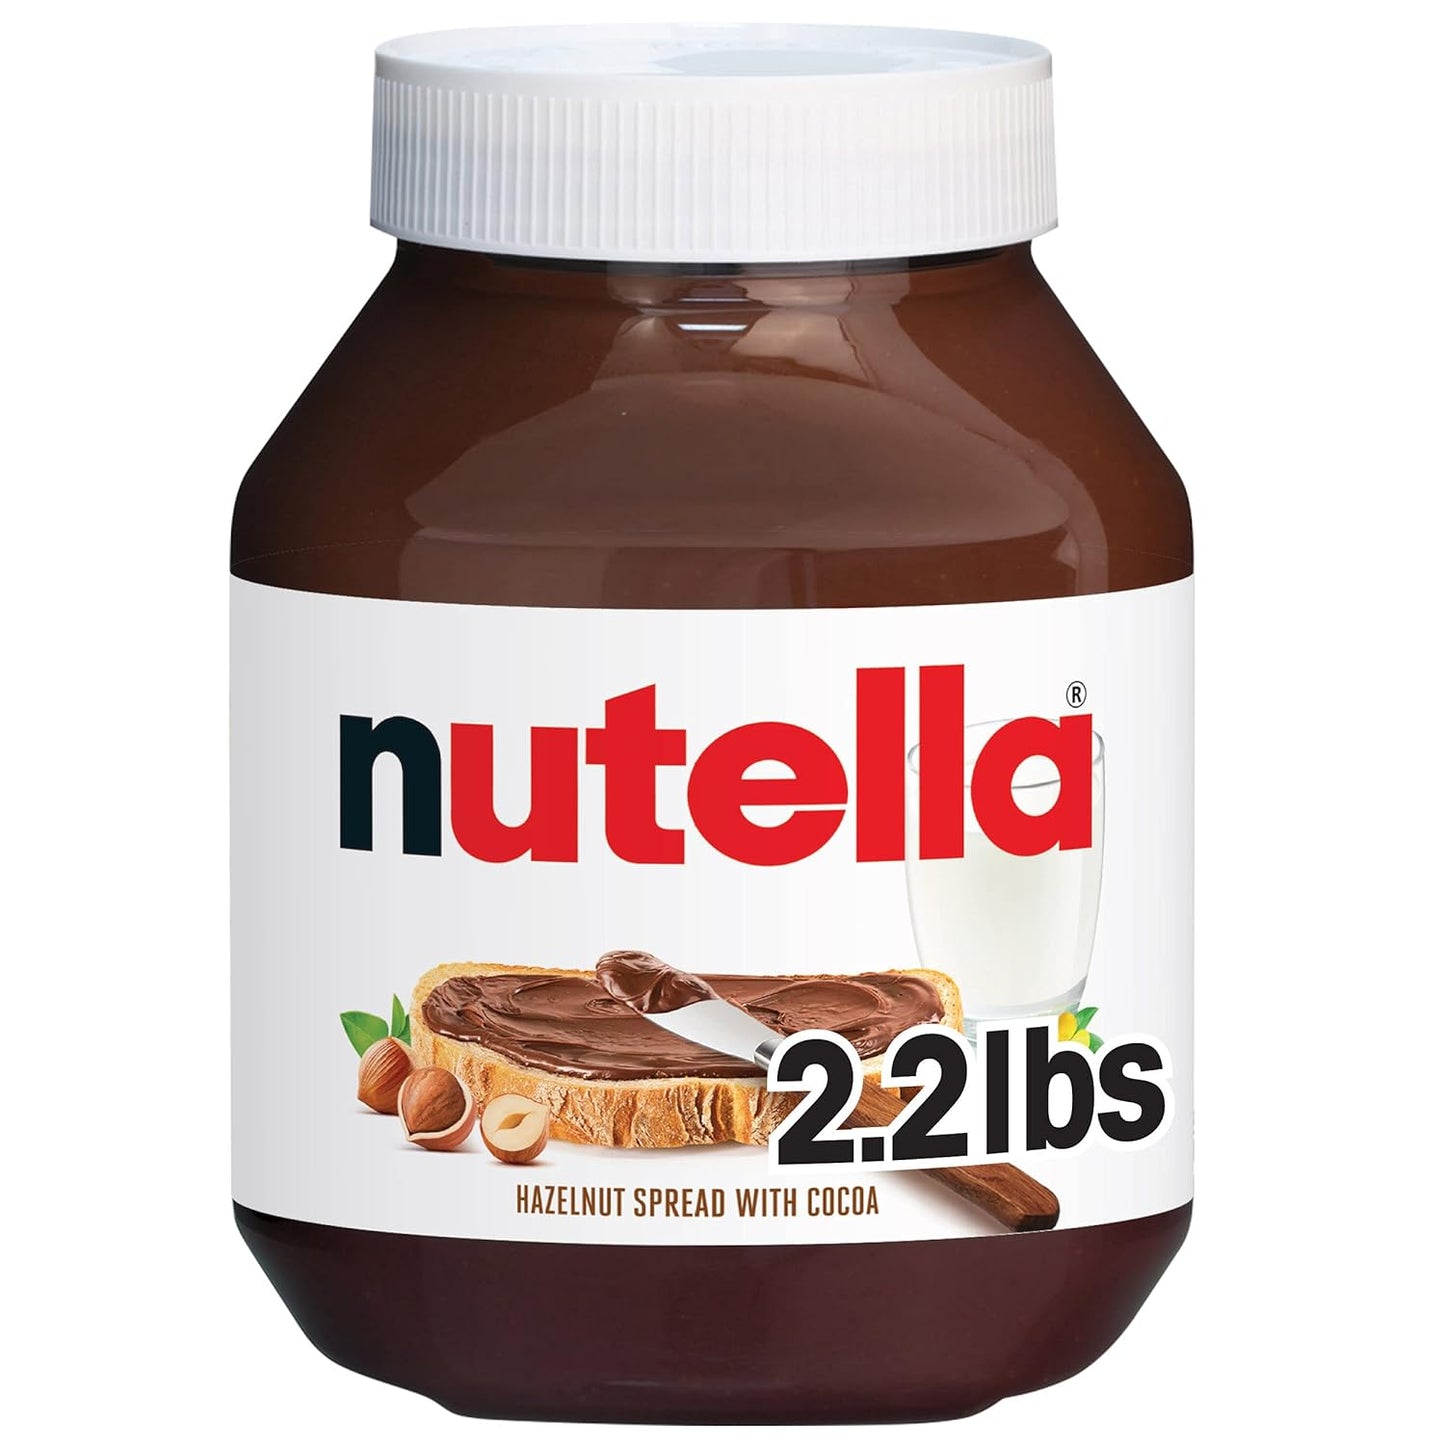 Nutella Hazelnut Spread With Cocoa For Breakfast, 35.3 Oz Jar